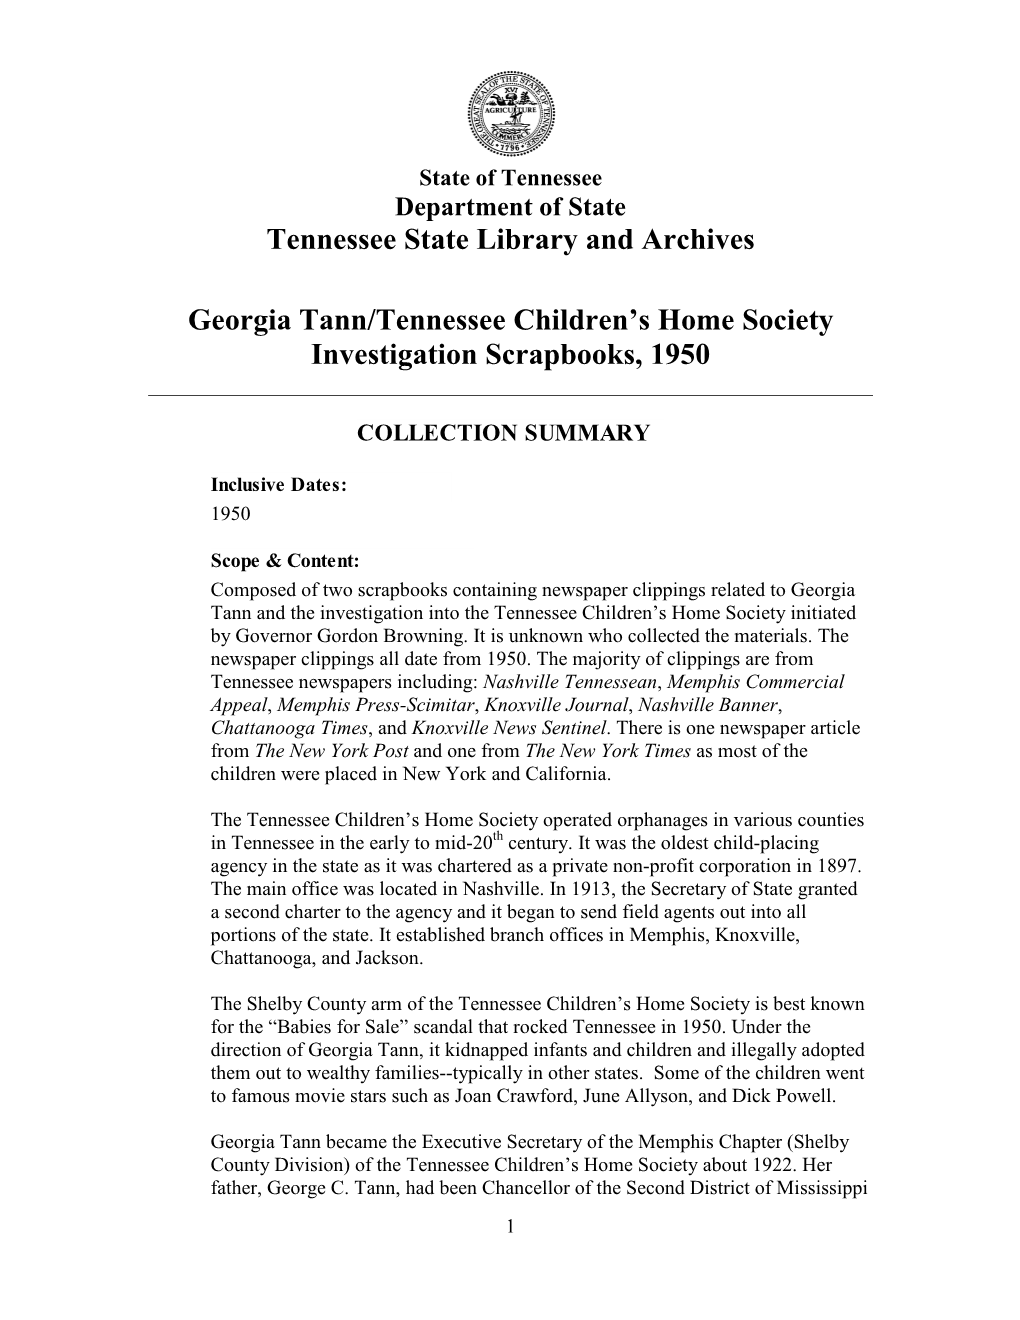 Georgia Tann/Tennessee Children's Home Society Investigation